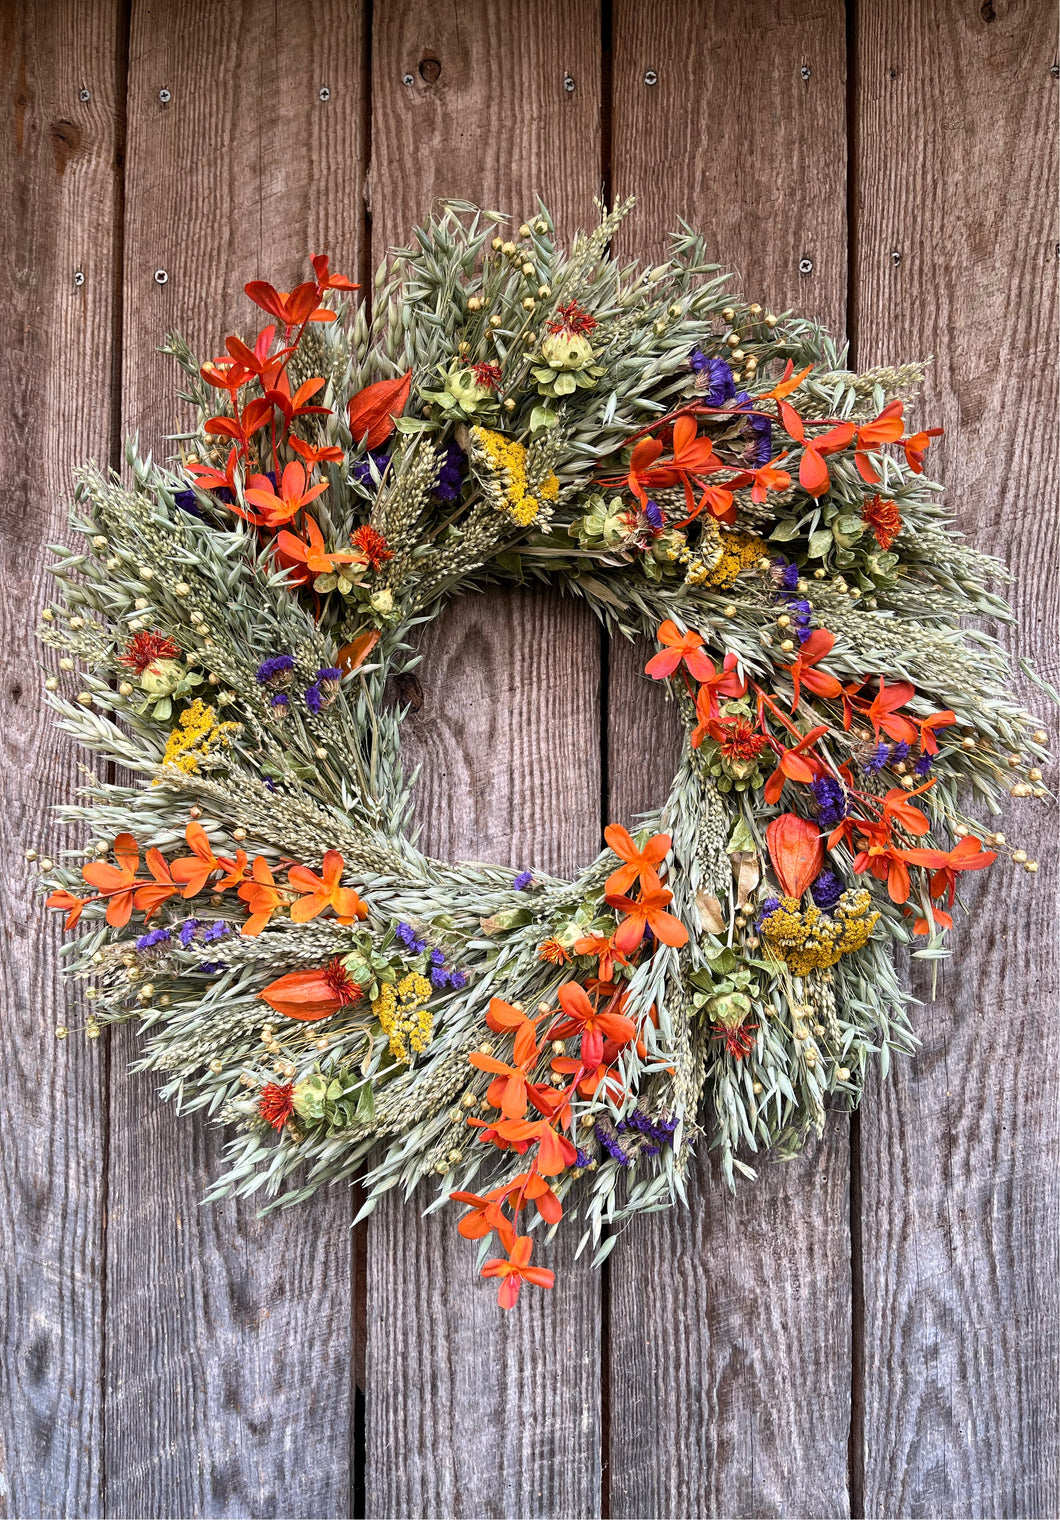 New 2022 Fall Garden Wreath. Thanksgiving Autumn Fall door décor. Dried Floral Wreath. Dried Flower Wreath for Autumn